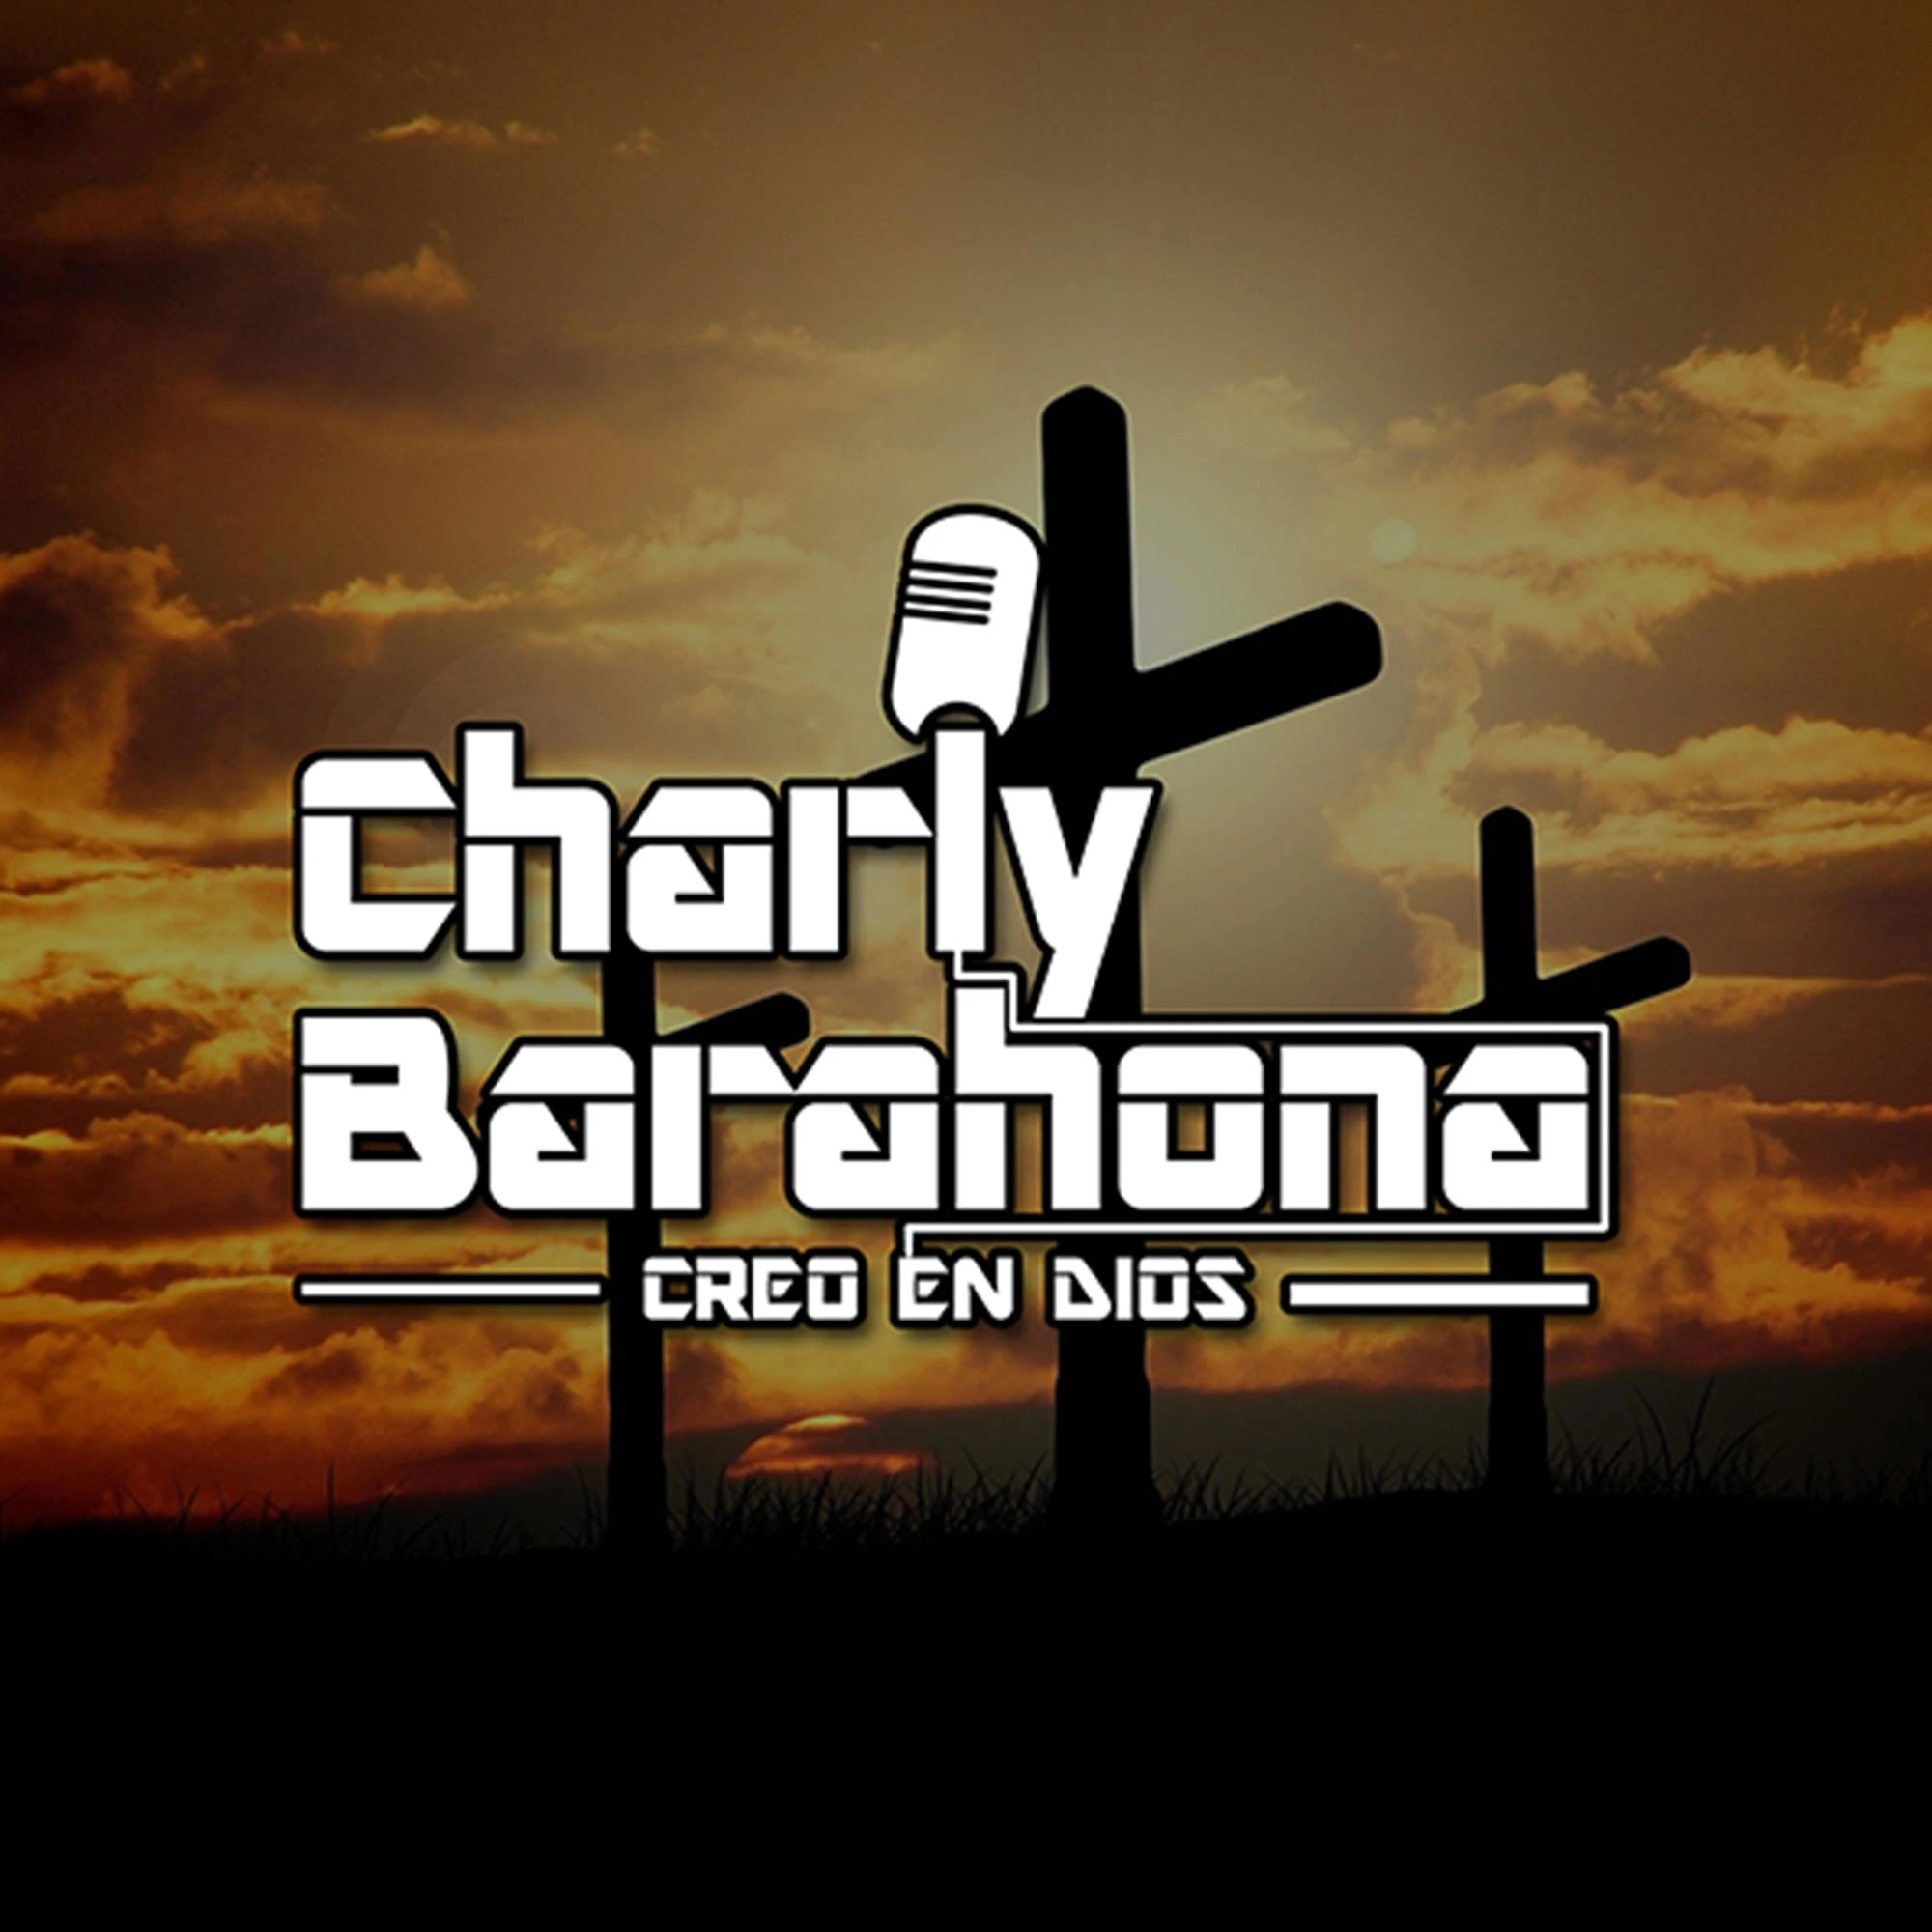 Charly Barahona -- Creo en Dios | Musica cristiana | Rap cristiano